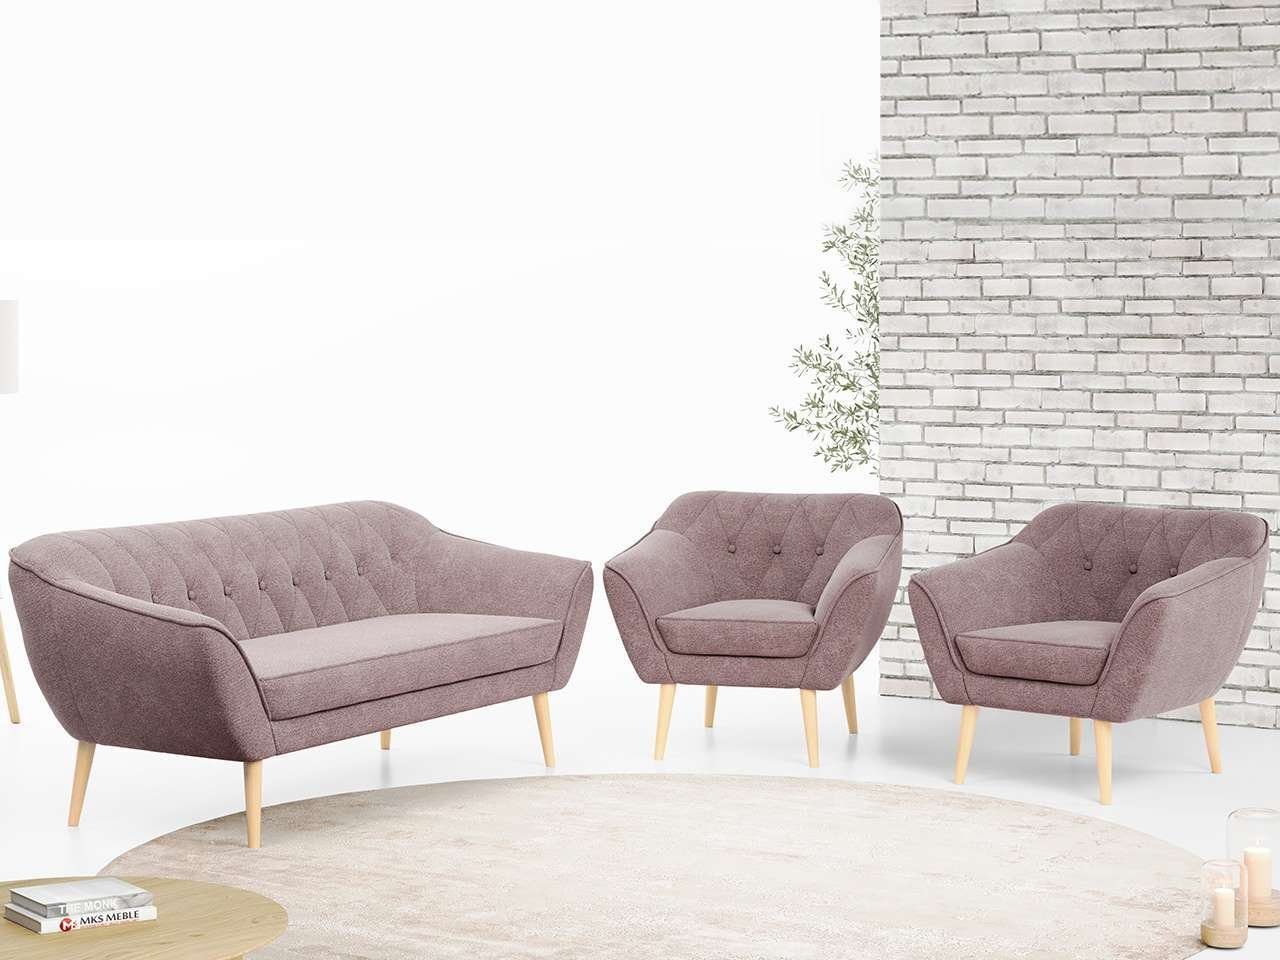 MKS MÖBEL Sofa PIRS 3 1 1, mit Relaxfunktion, Moderne Sofa Set, Skandinavische Deko Rosa Matana